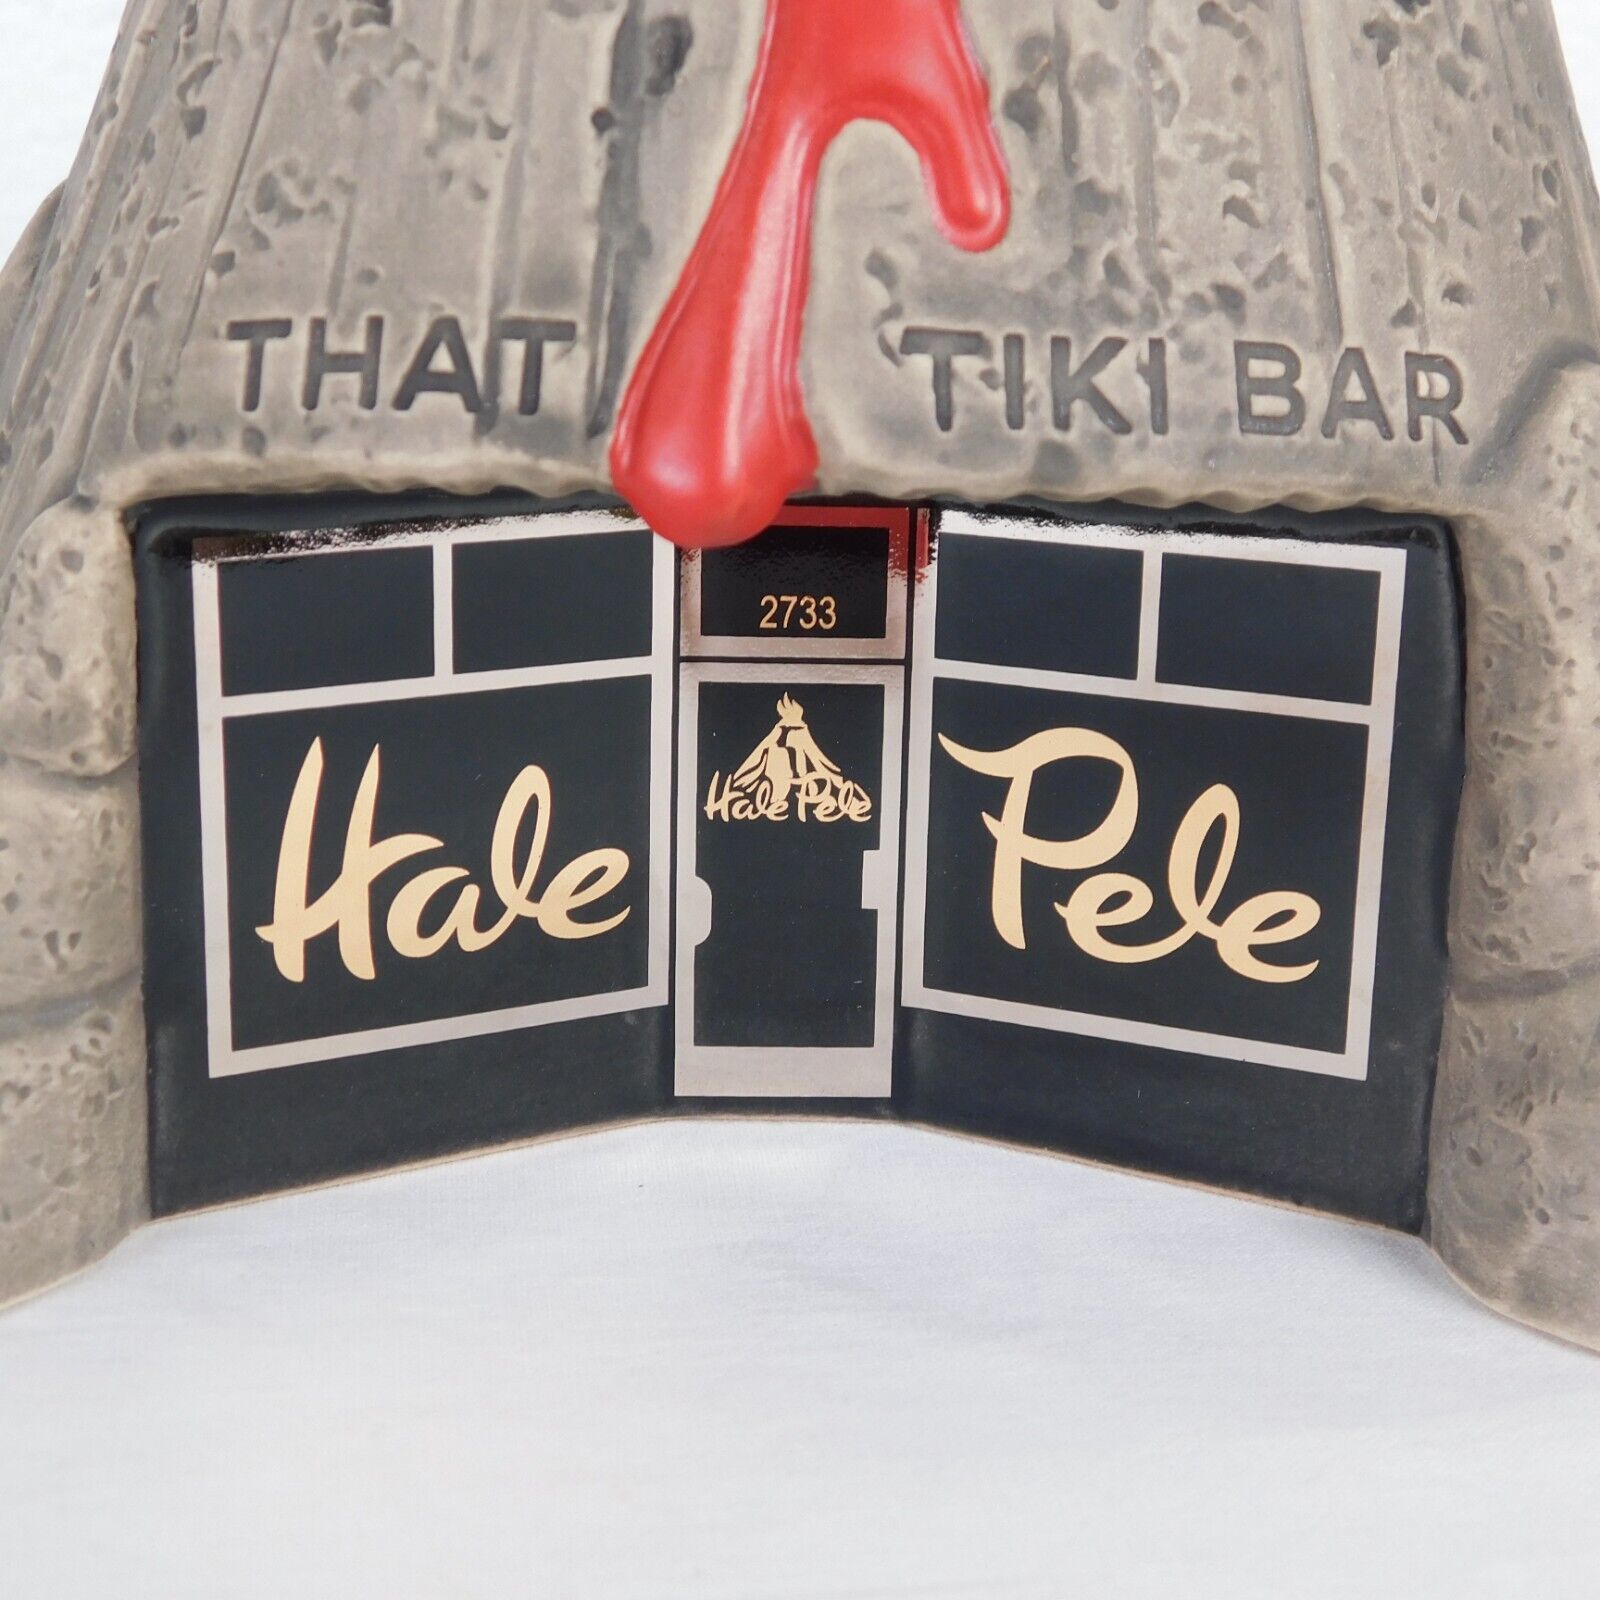 Primary image for Hale Pele 10th Anniversary Tiki Mug Signed by VanTiki Limited Edition #117/150